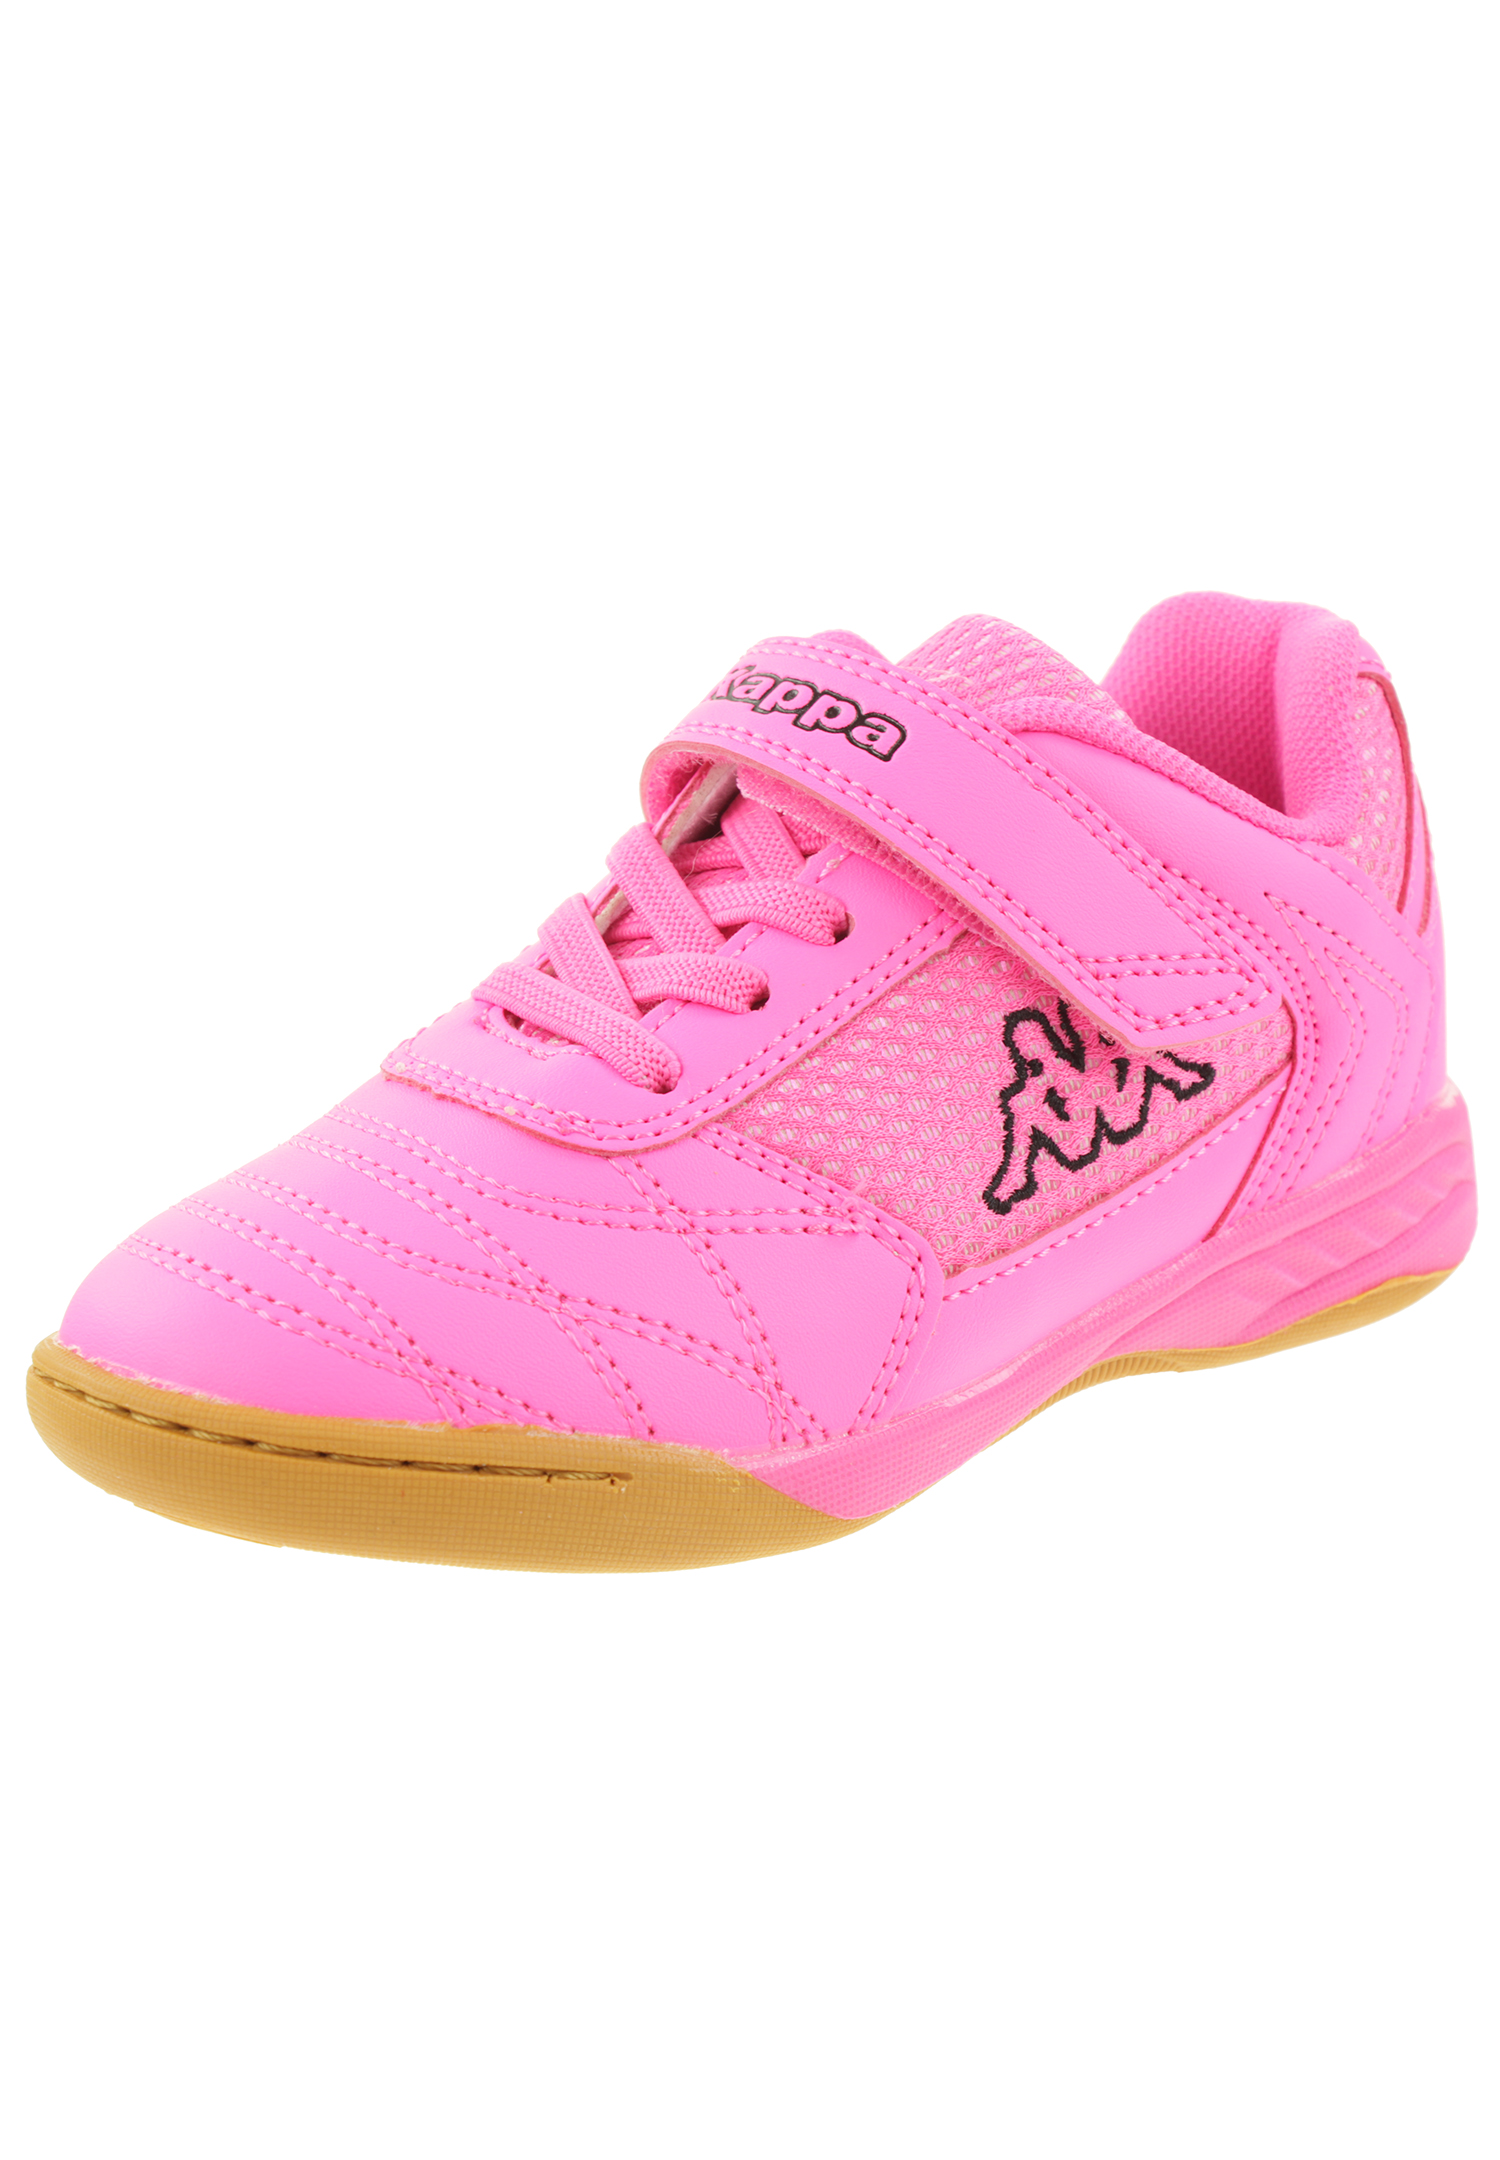 2211 260765OCK Sneaker Kappa Turnschuh pink/black Mädchen